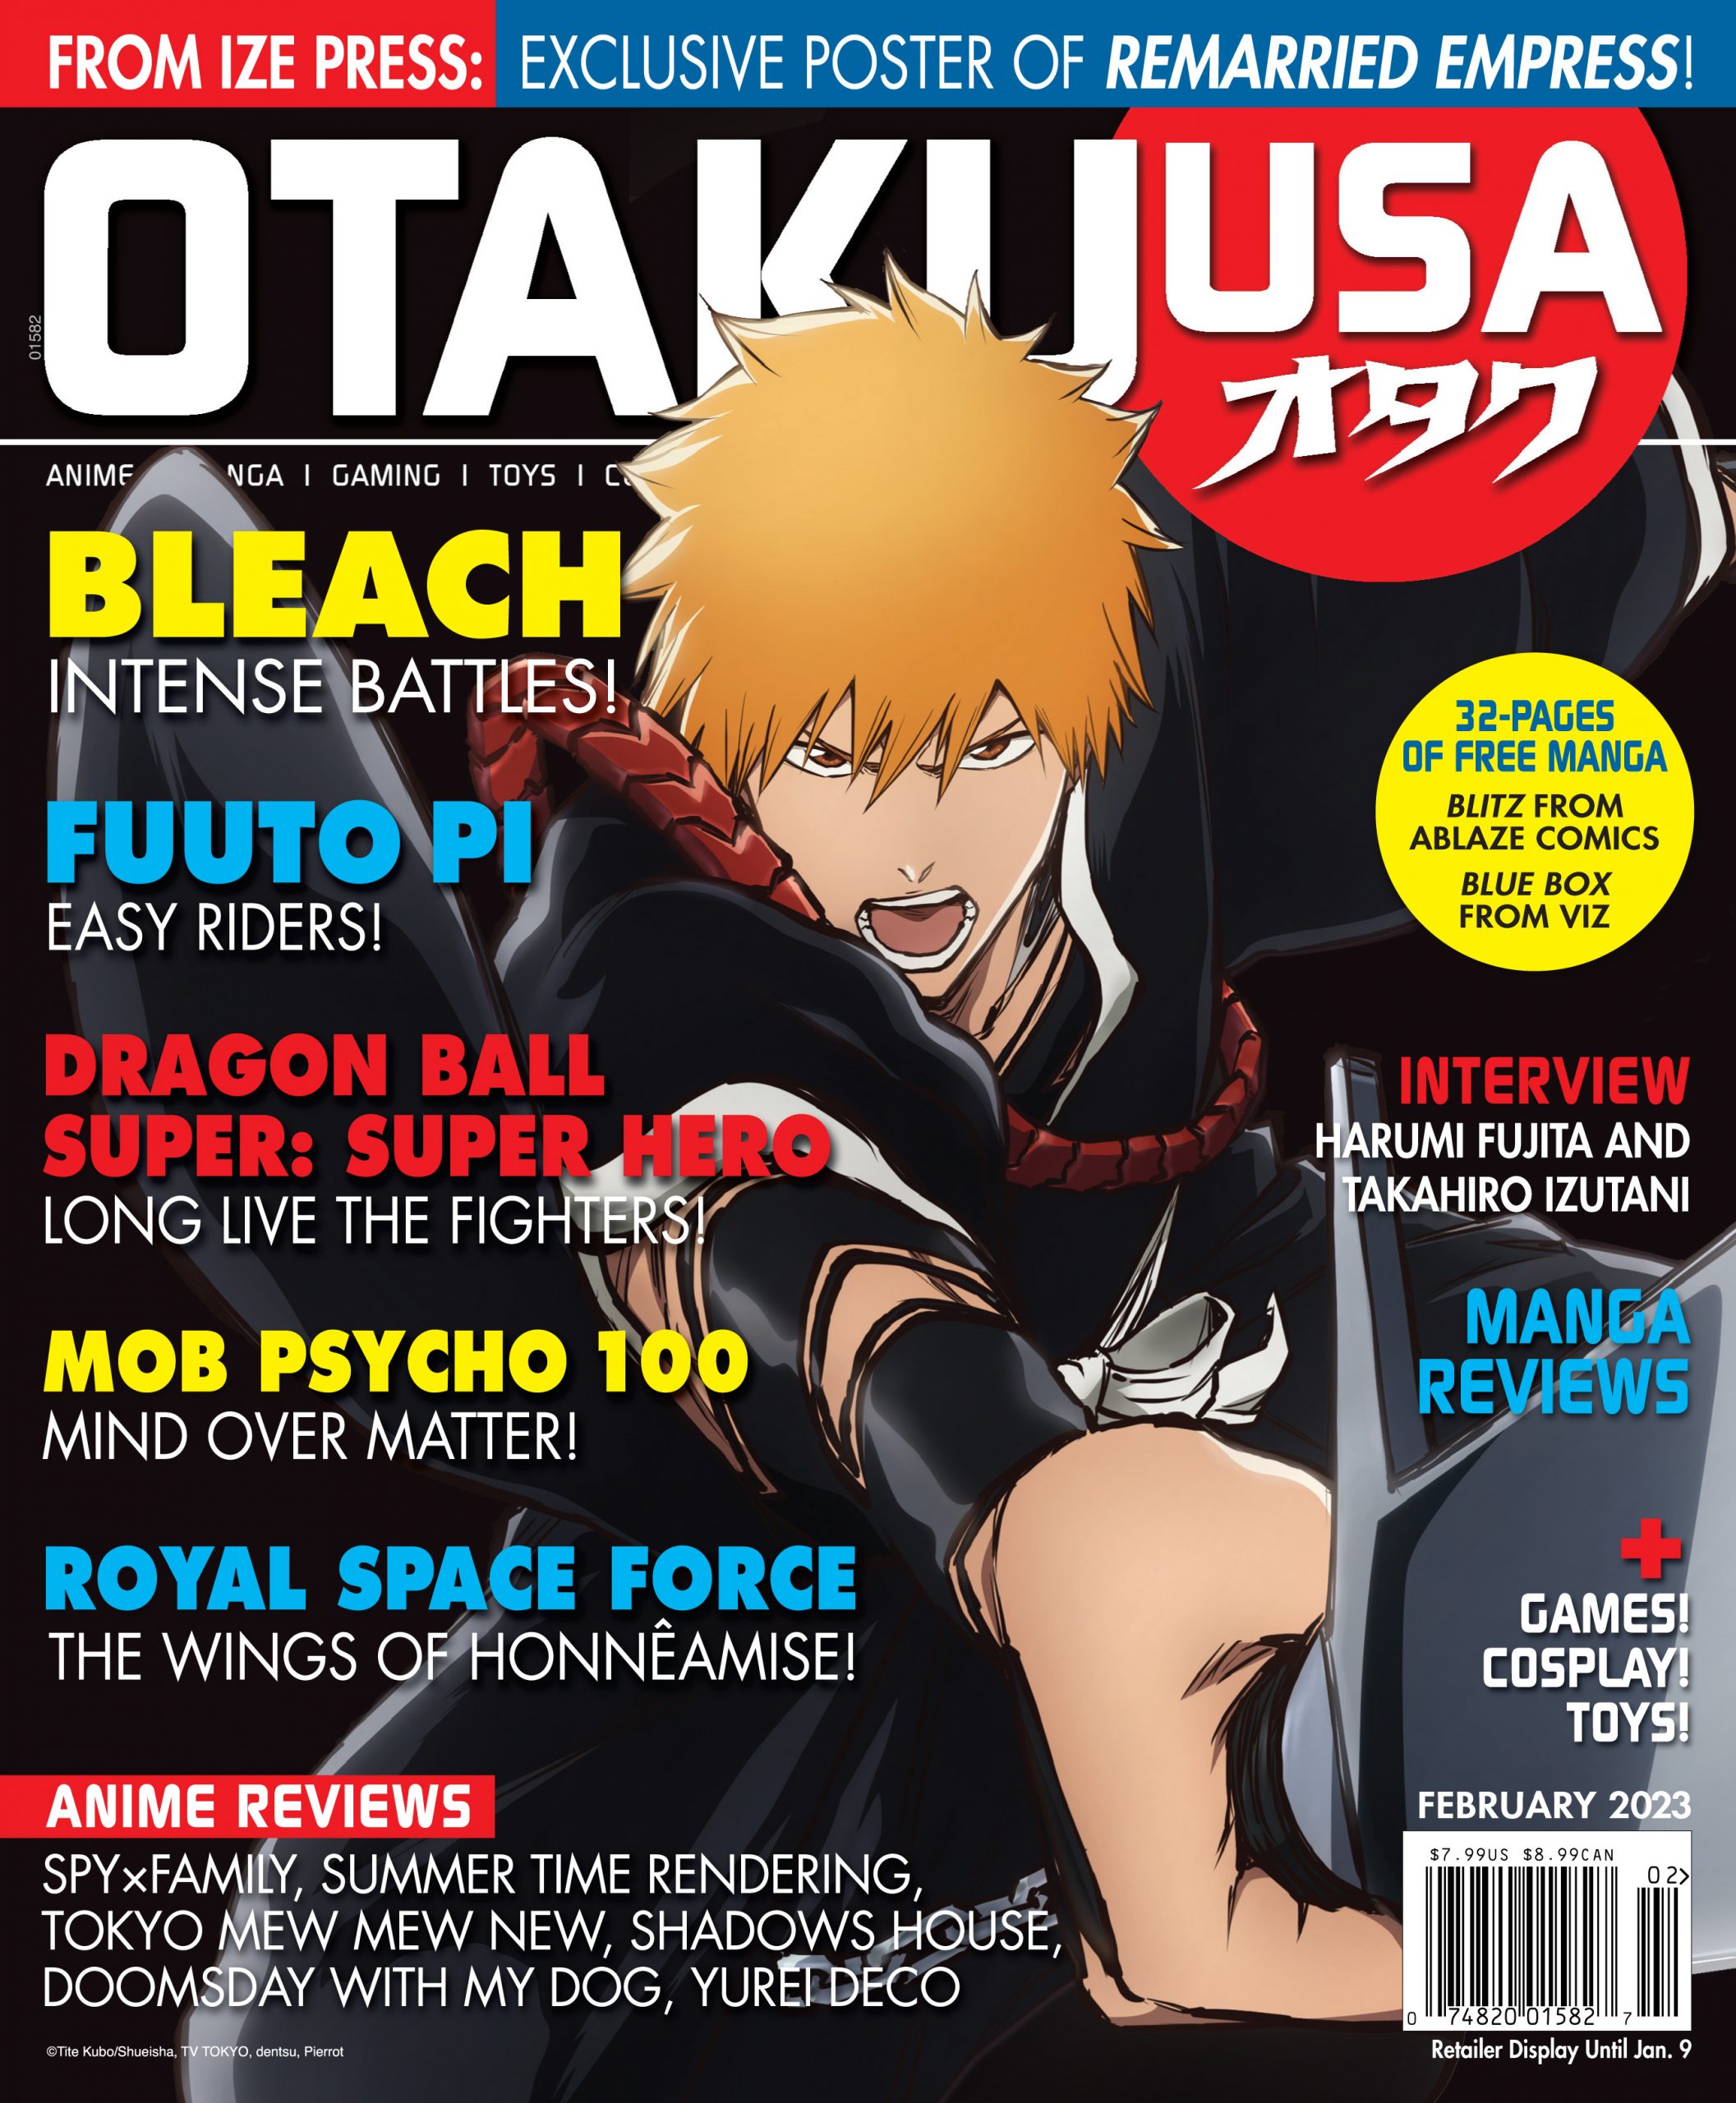 Bleach Is Back In The Latest Issue Of Otaku Usa Now On Sale Otaku Usa Magazine